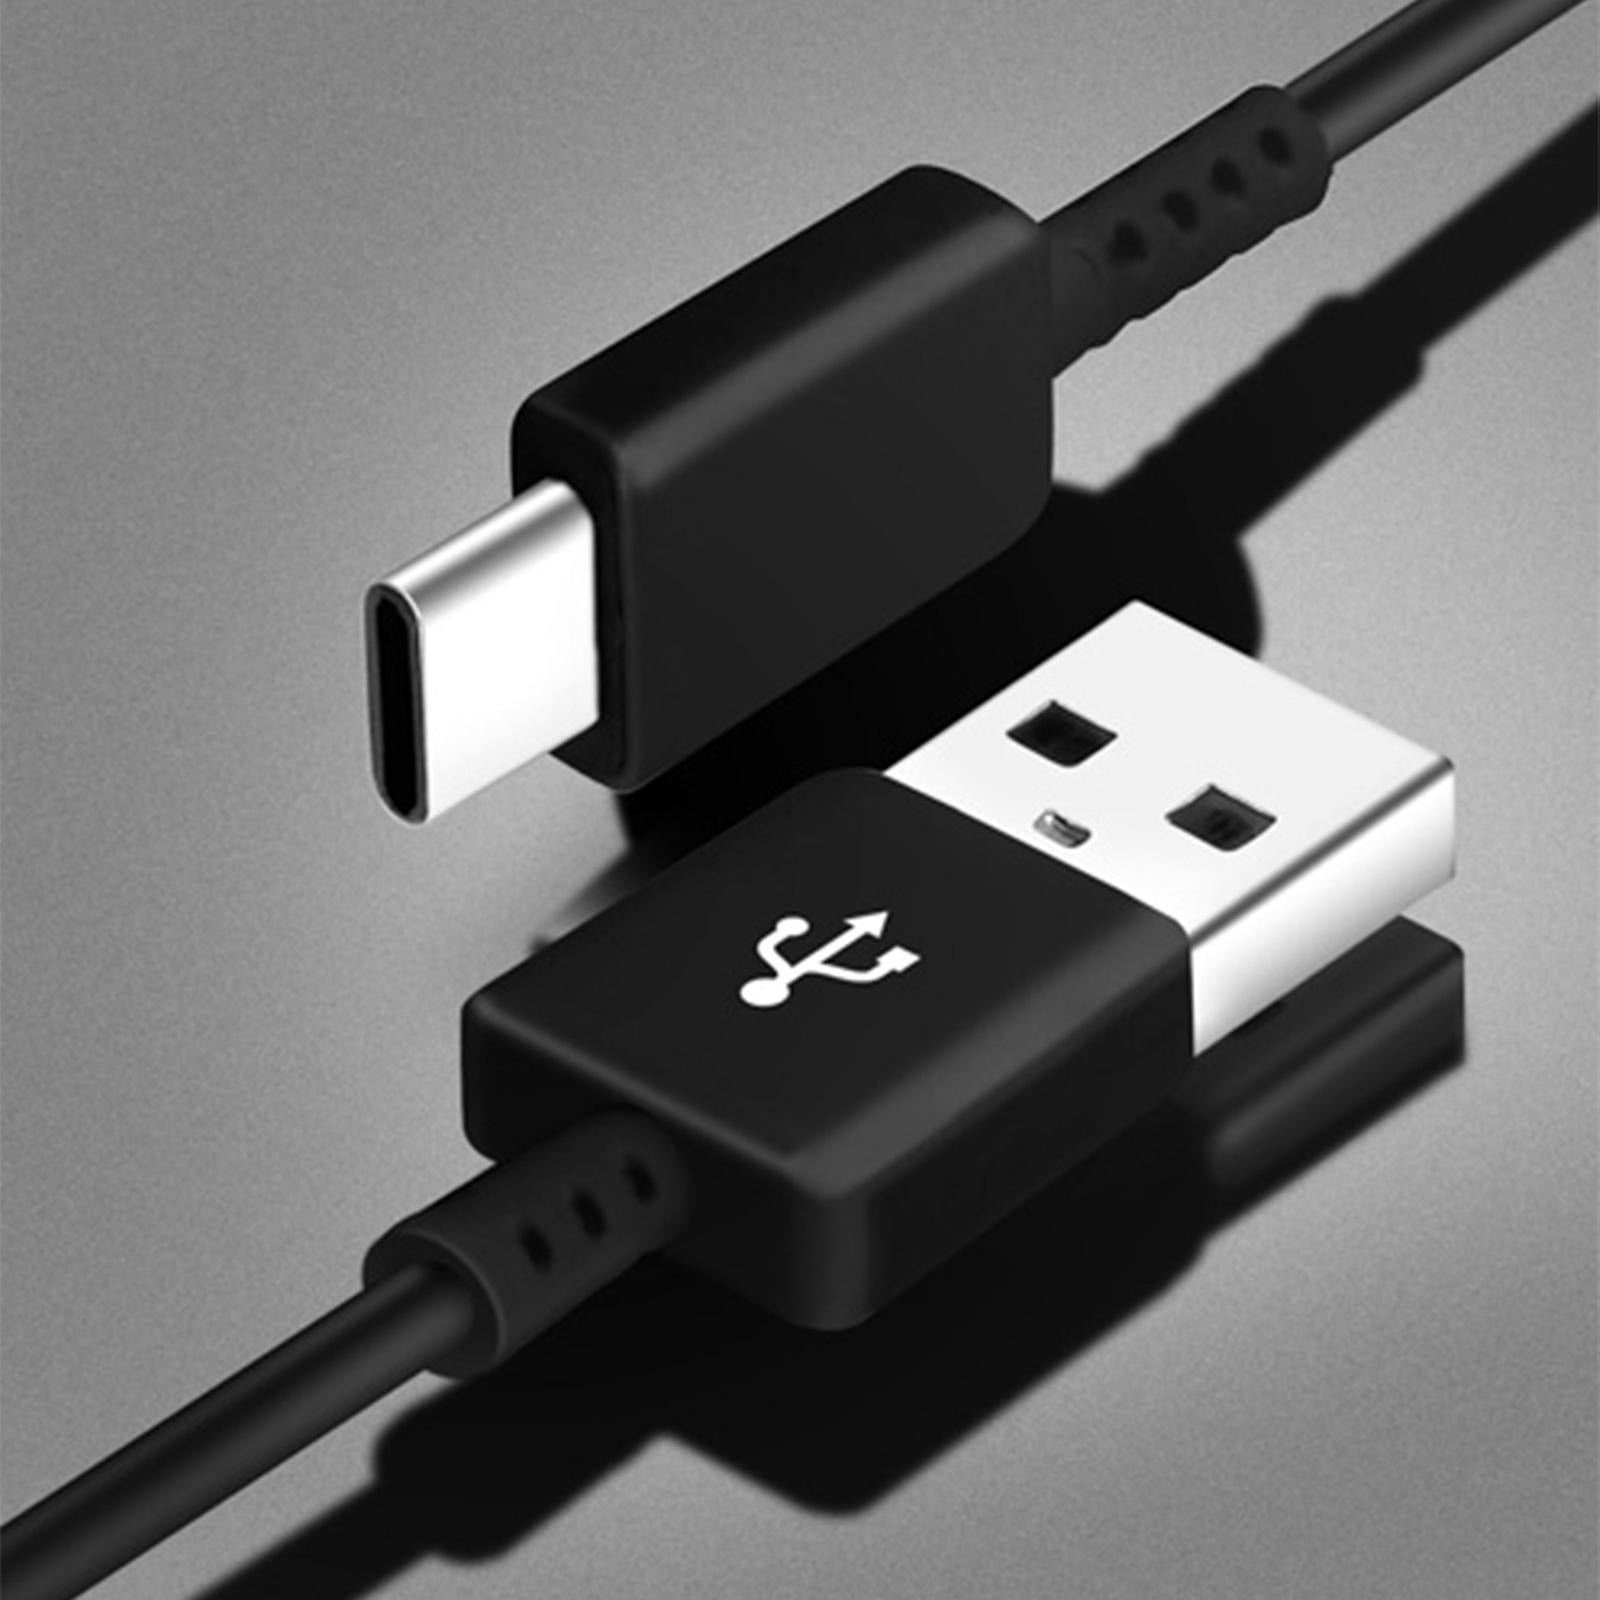 Original Samsung Official EP-DG930 USB Type-C Charging Cable 1.5M Black 